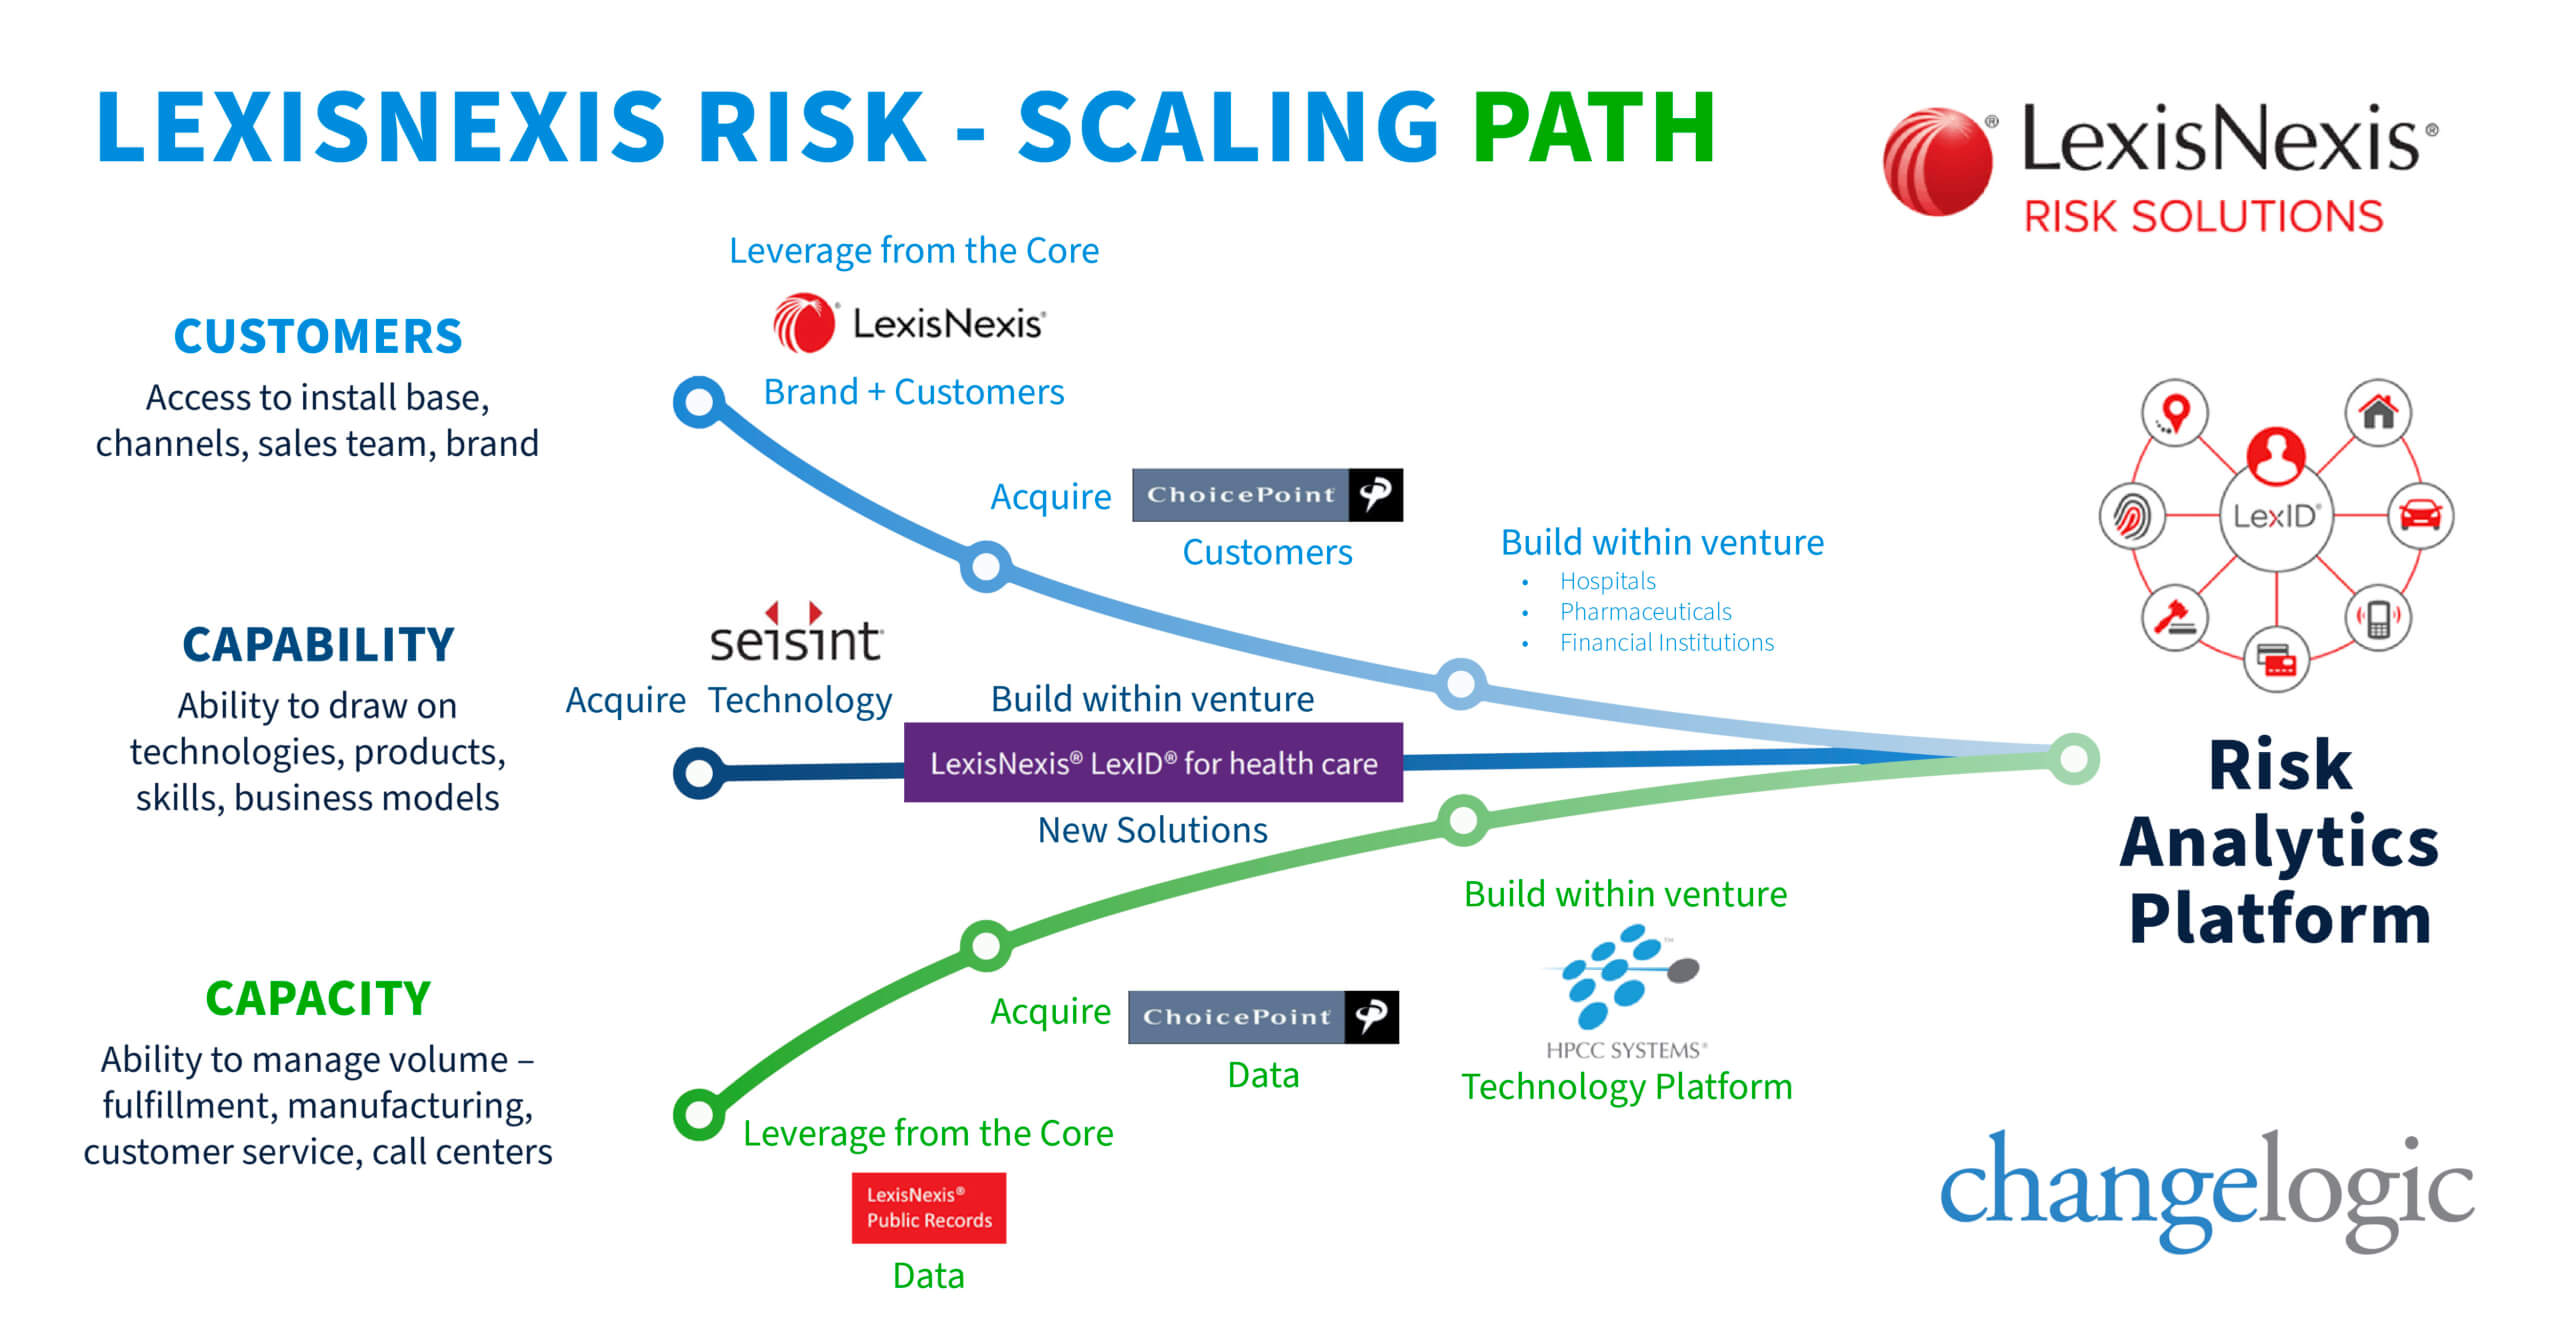 CL scaling path scalingpath lexisnexis